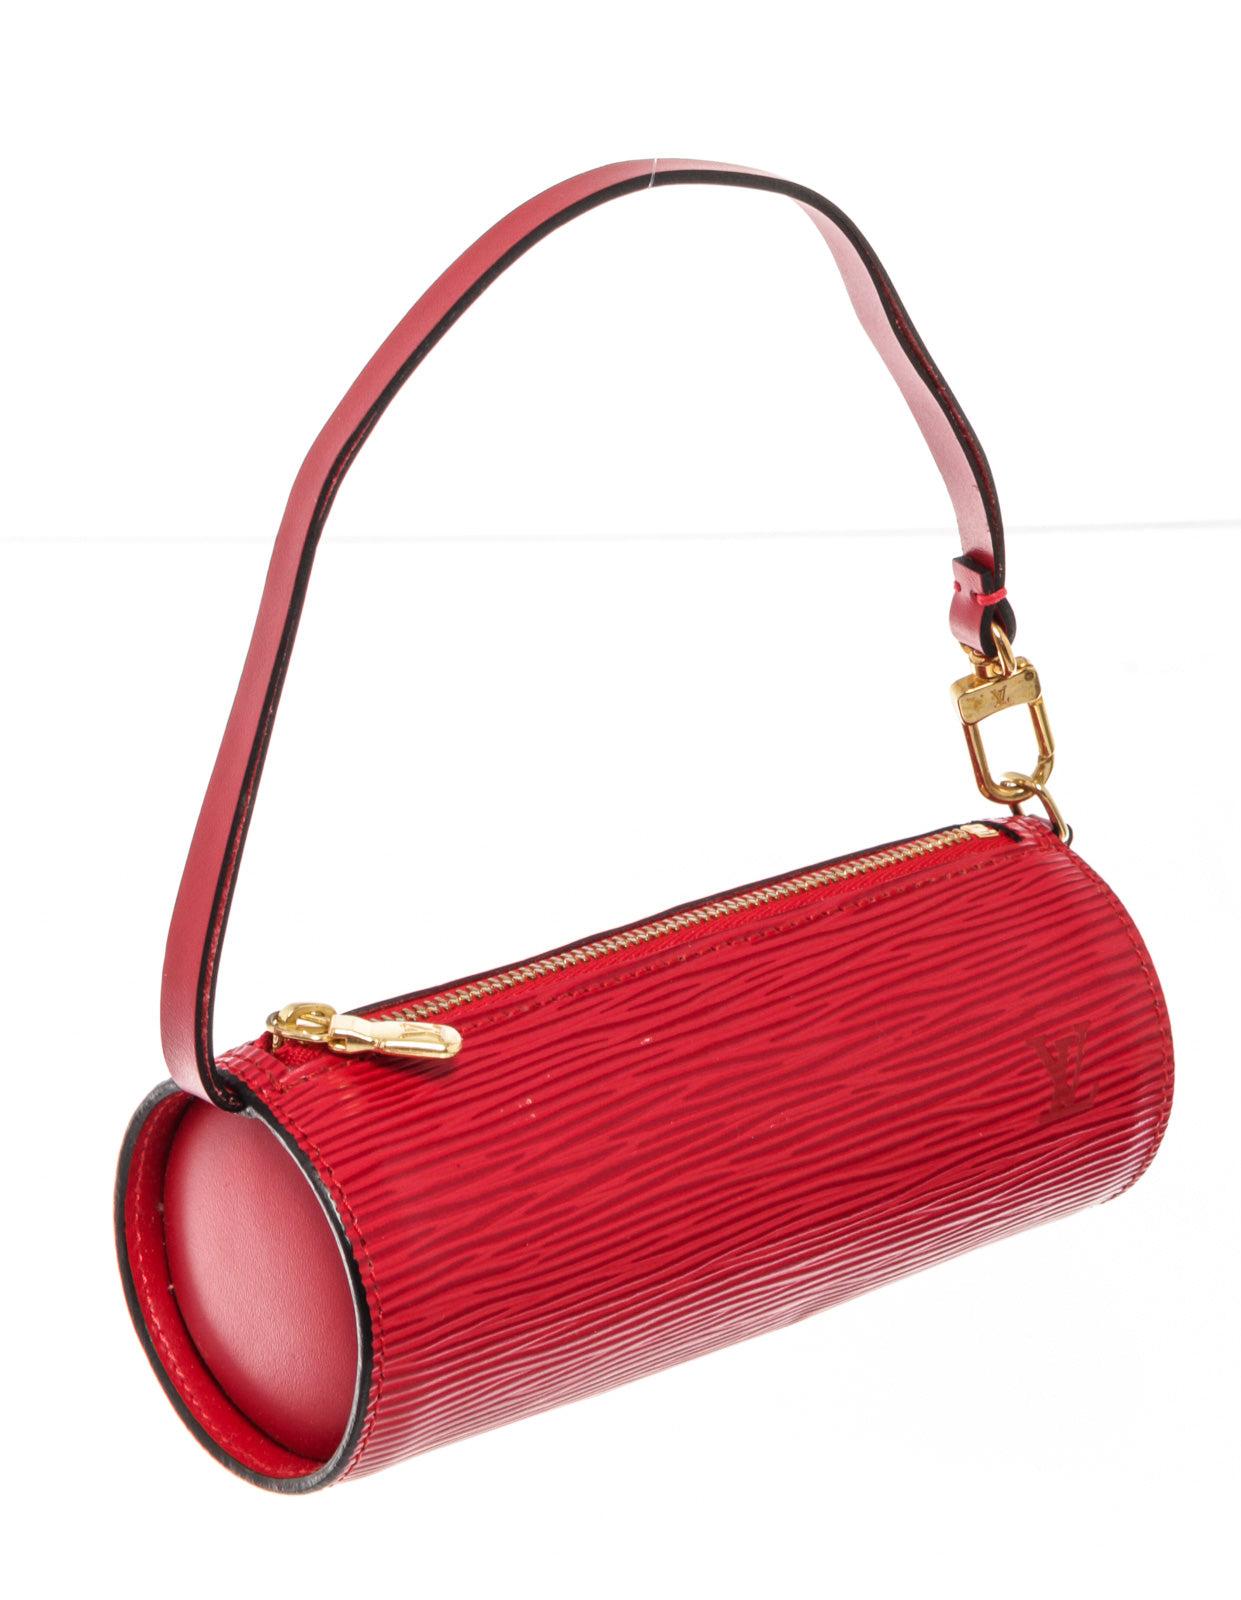 Louis Vuitton Red Epi Leather Mini Papillon Pochette Bag with siler-tone hardware, monogram material, tan vachetta leather trim, top handle, leather shoulder strap, and zipper closure.

61172MSC